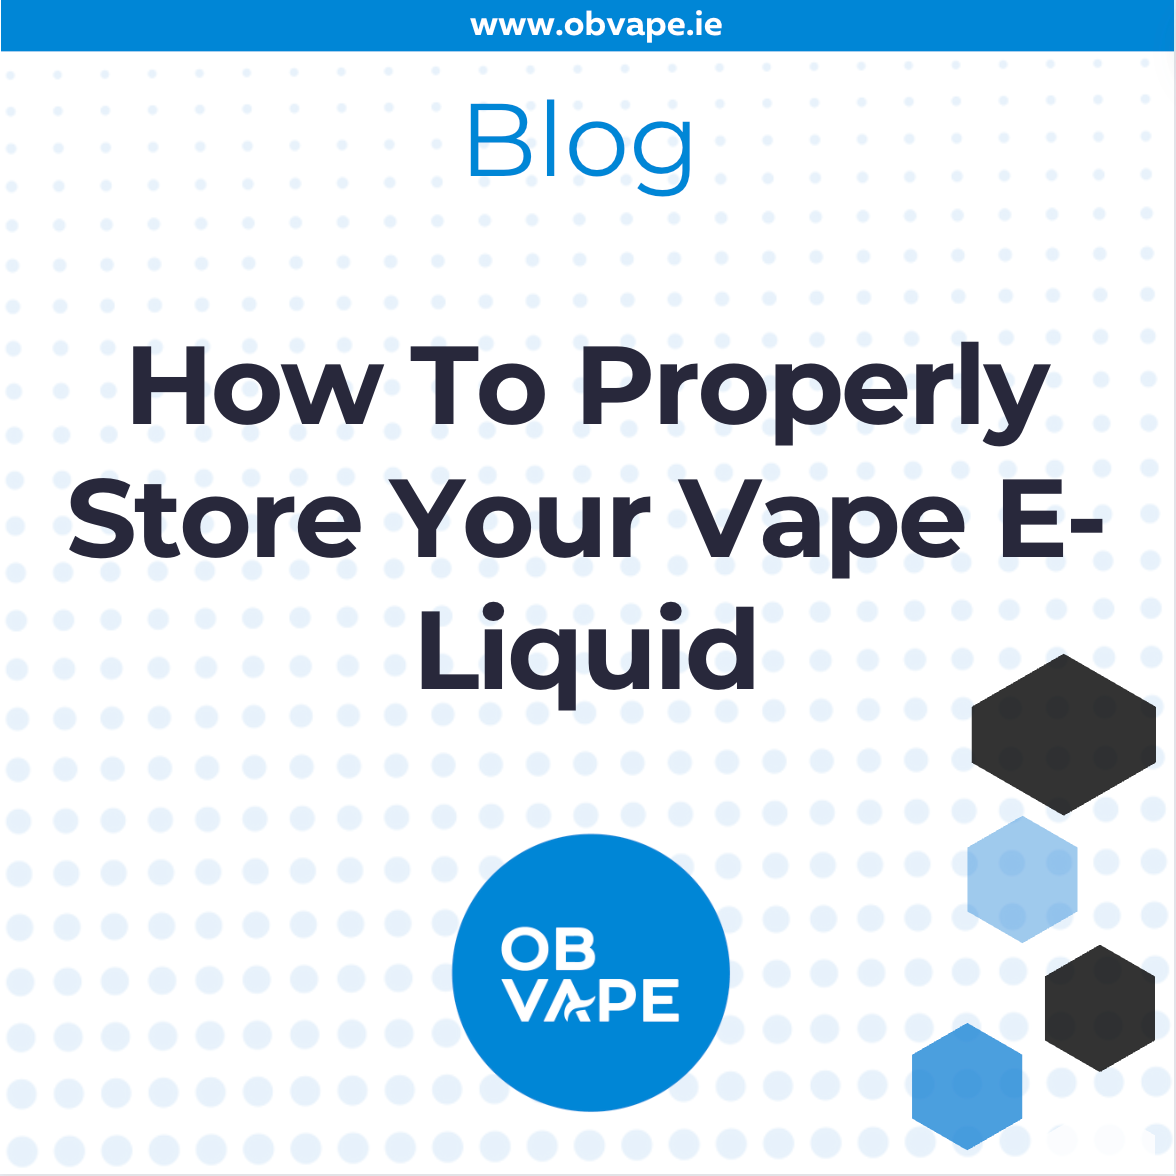 How To Properly Store Your Vape E-Liquid